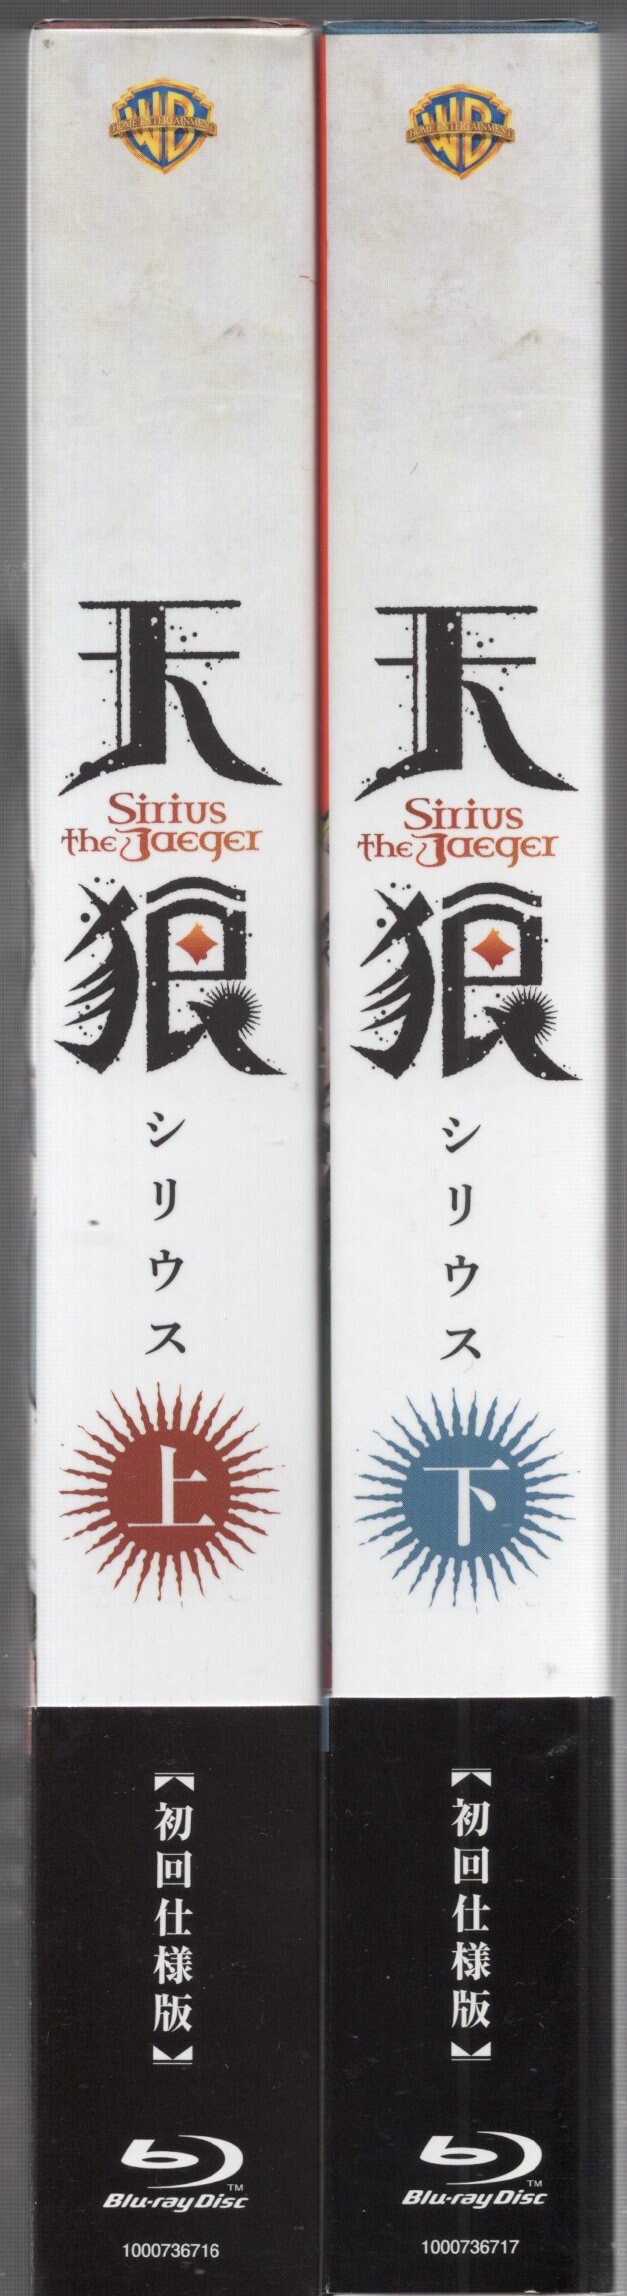 TENROU : SIRIUS THE JAEGER - COMPLETE ANIME TV SERIES DVD BOX SET (1-12  EPS)